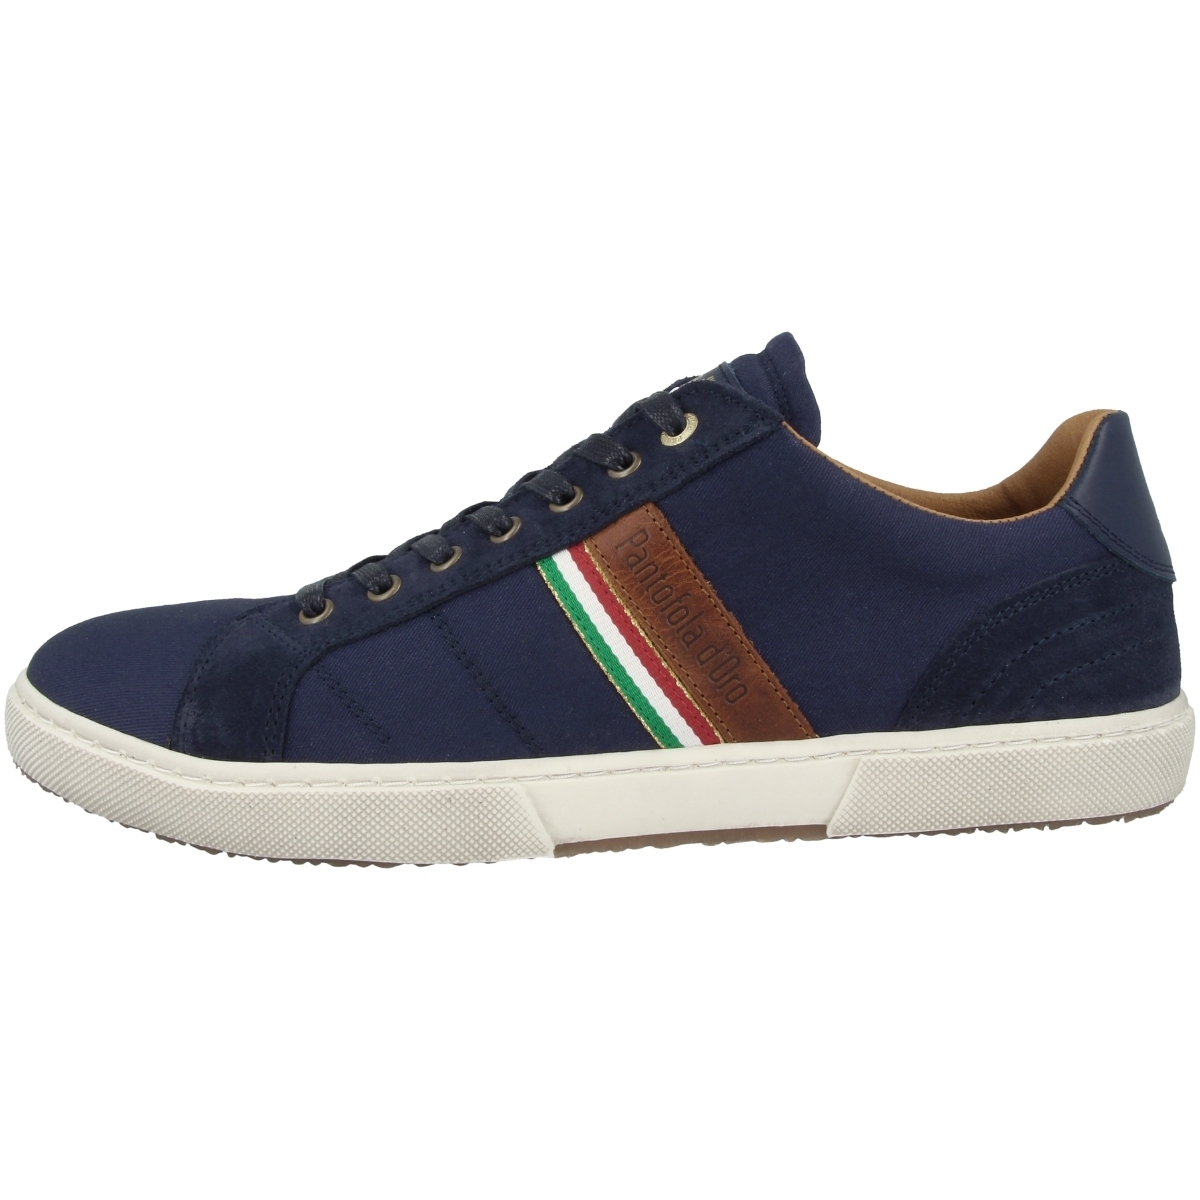 Pantofola d'Oro Modena Canvas Uomo Low Sneaker low blau